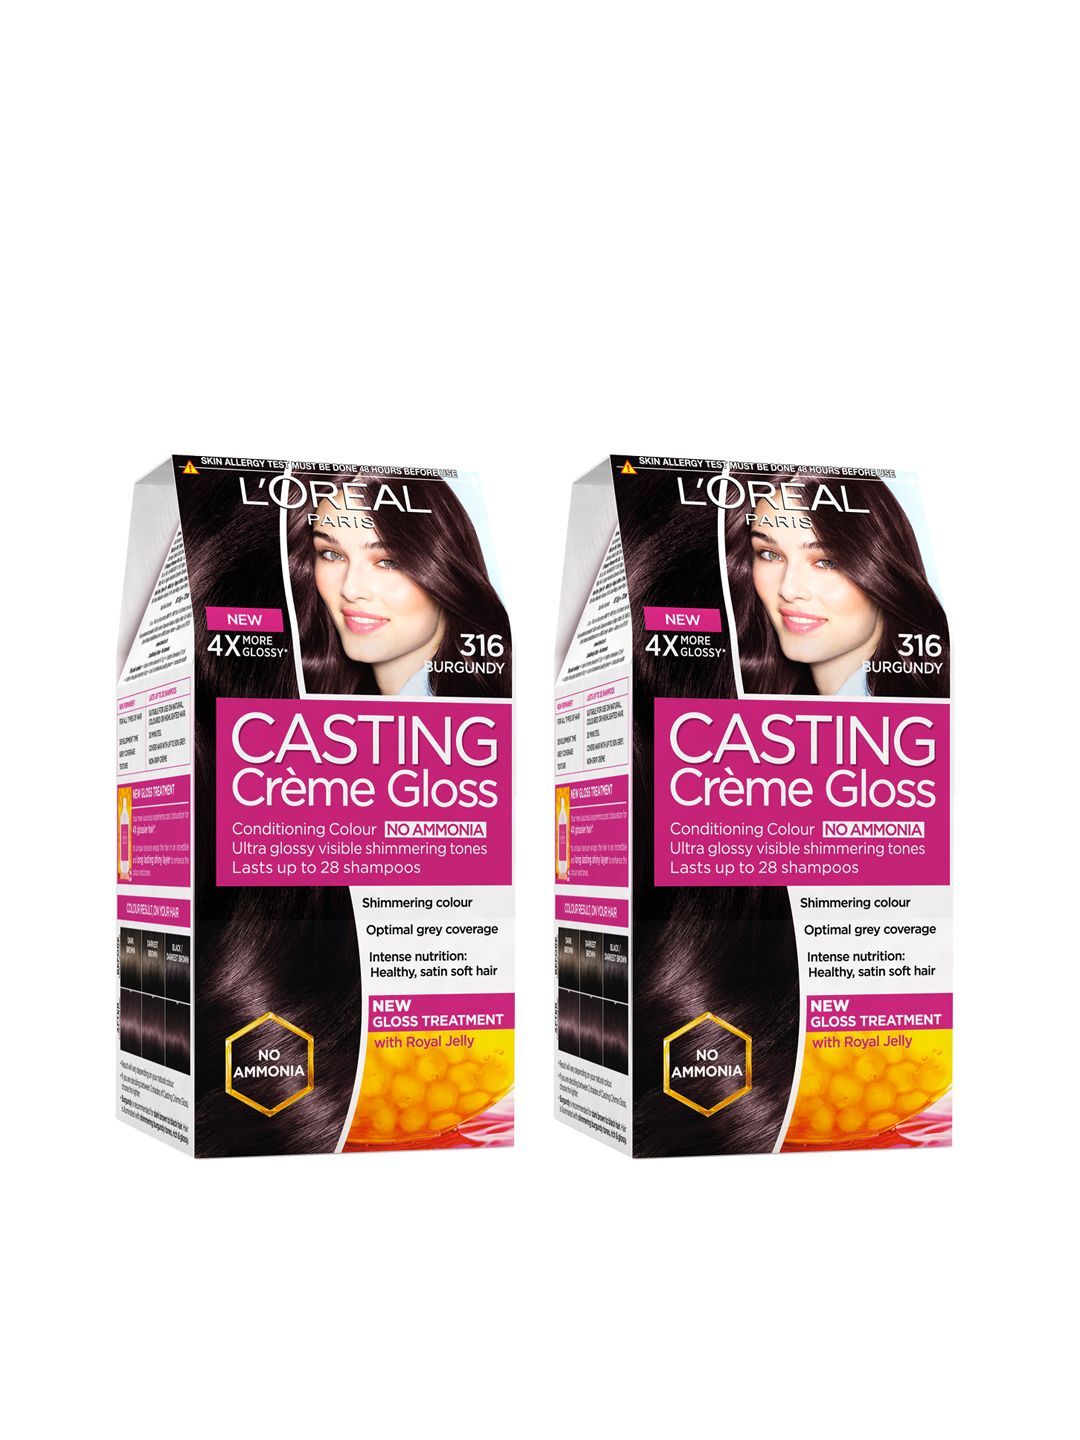 LOreal Paris Set of 2 Casting Creme Gloss Hair Color - Burgundy 316 Price in India